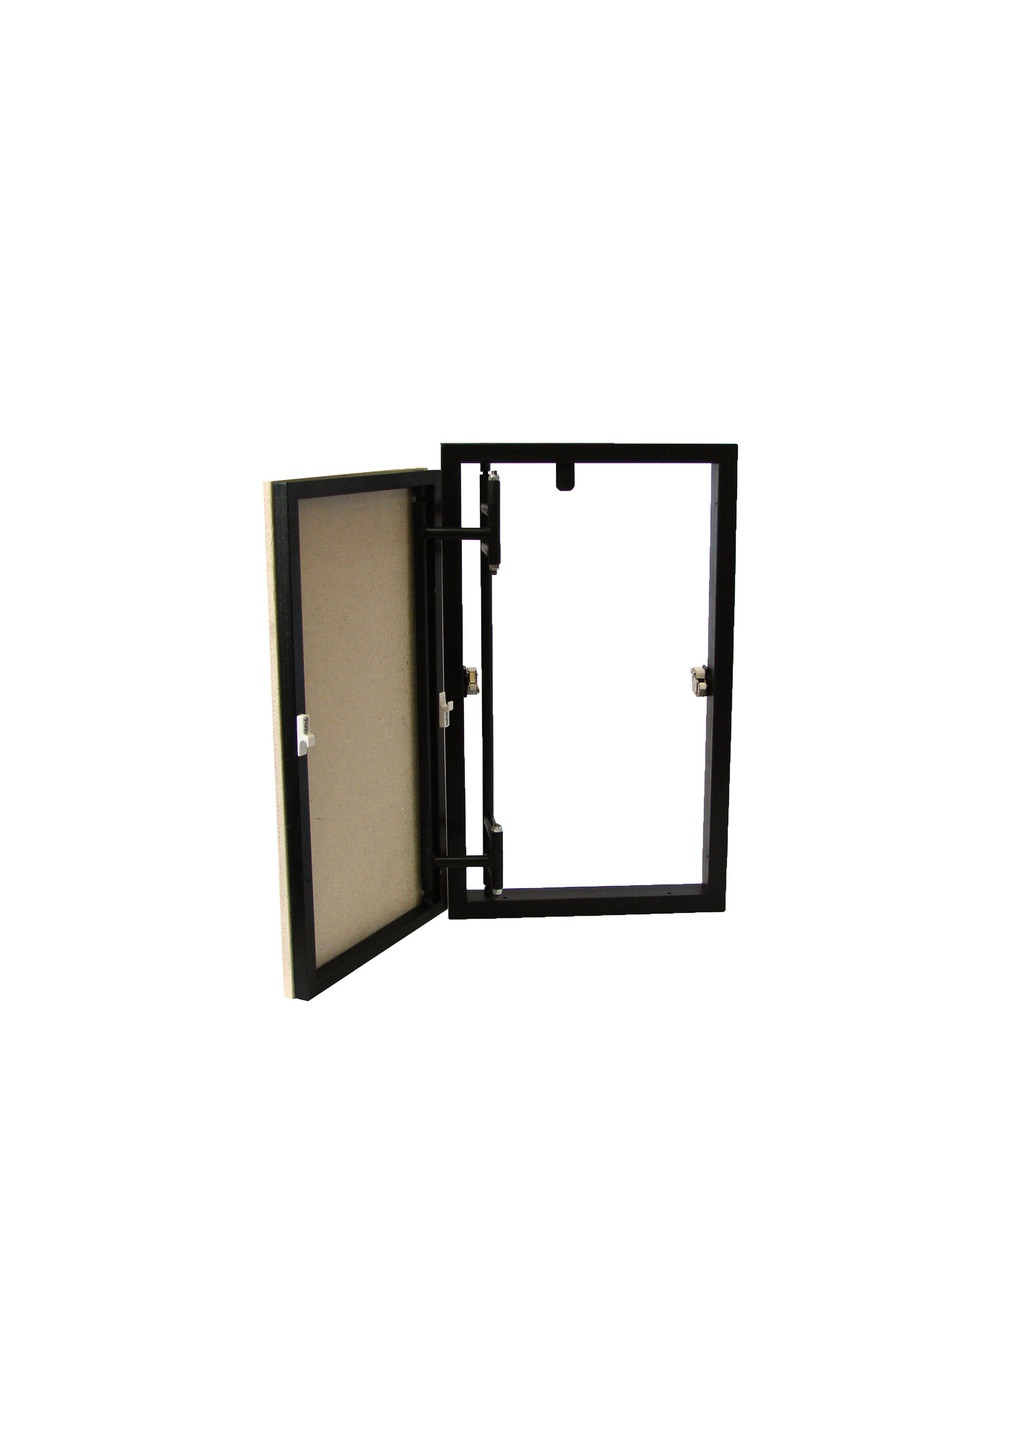 Ревизионный люк скрытого монтажа под плитку нажимного типа 300x700 ревизионная дверца для плитки (1130) S-Dom (264208762)